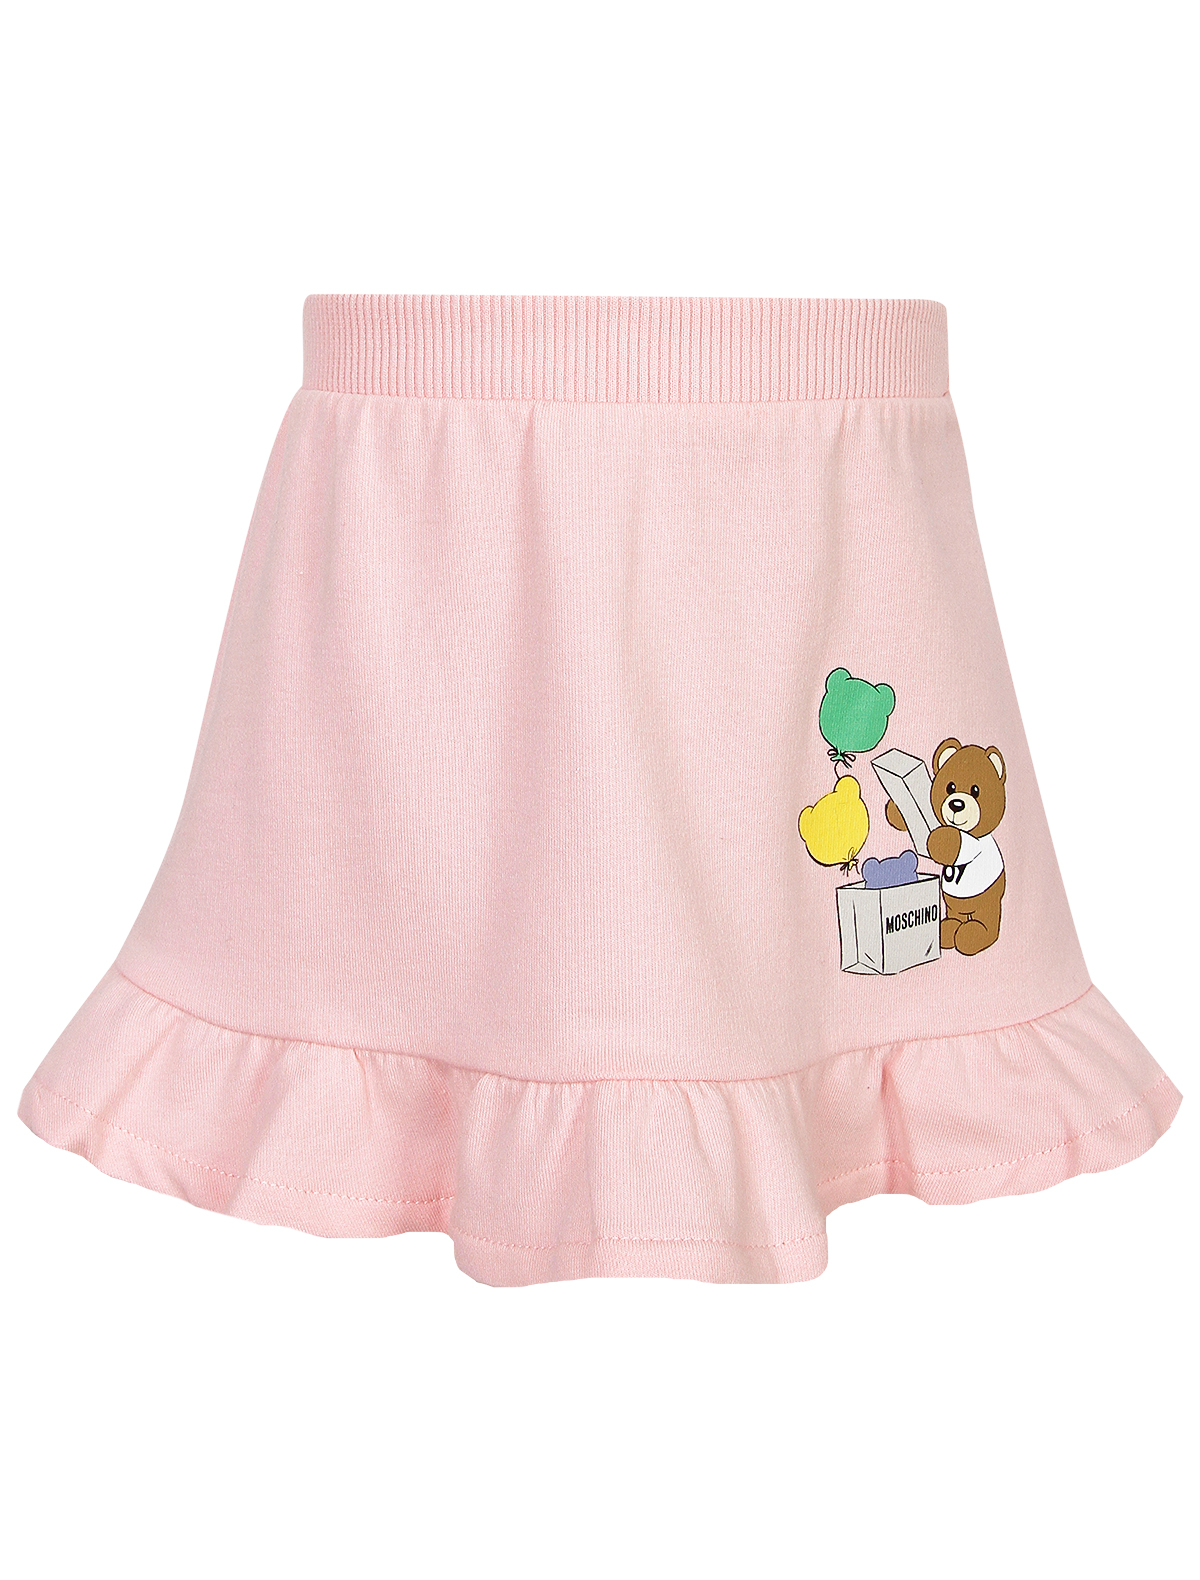 юбка moschino для девочки, розовая